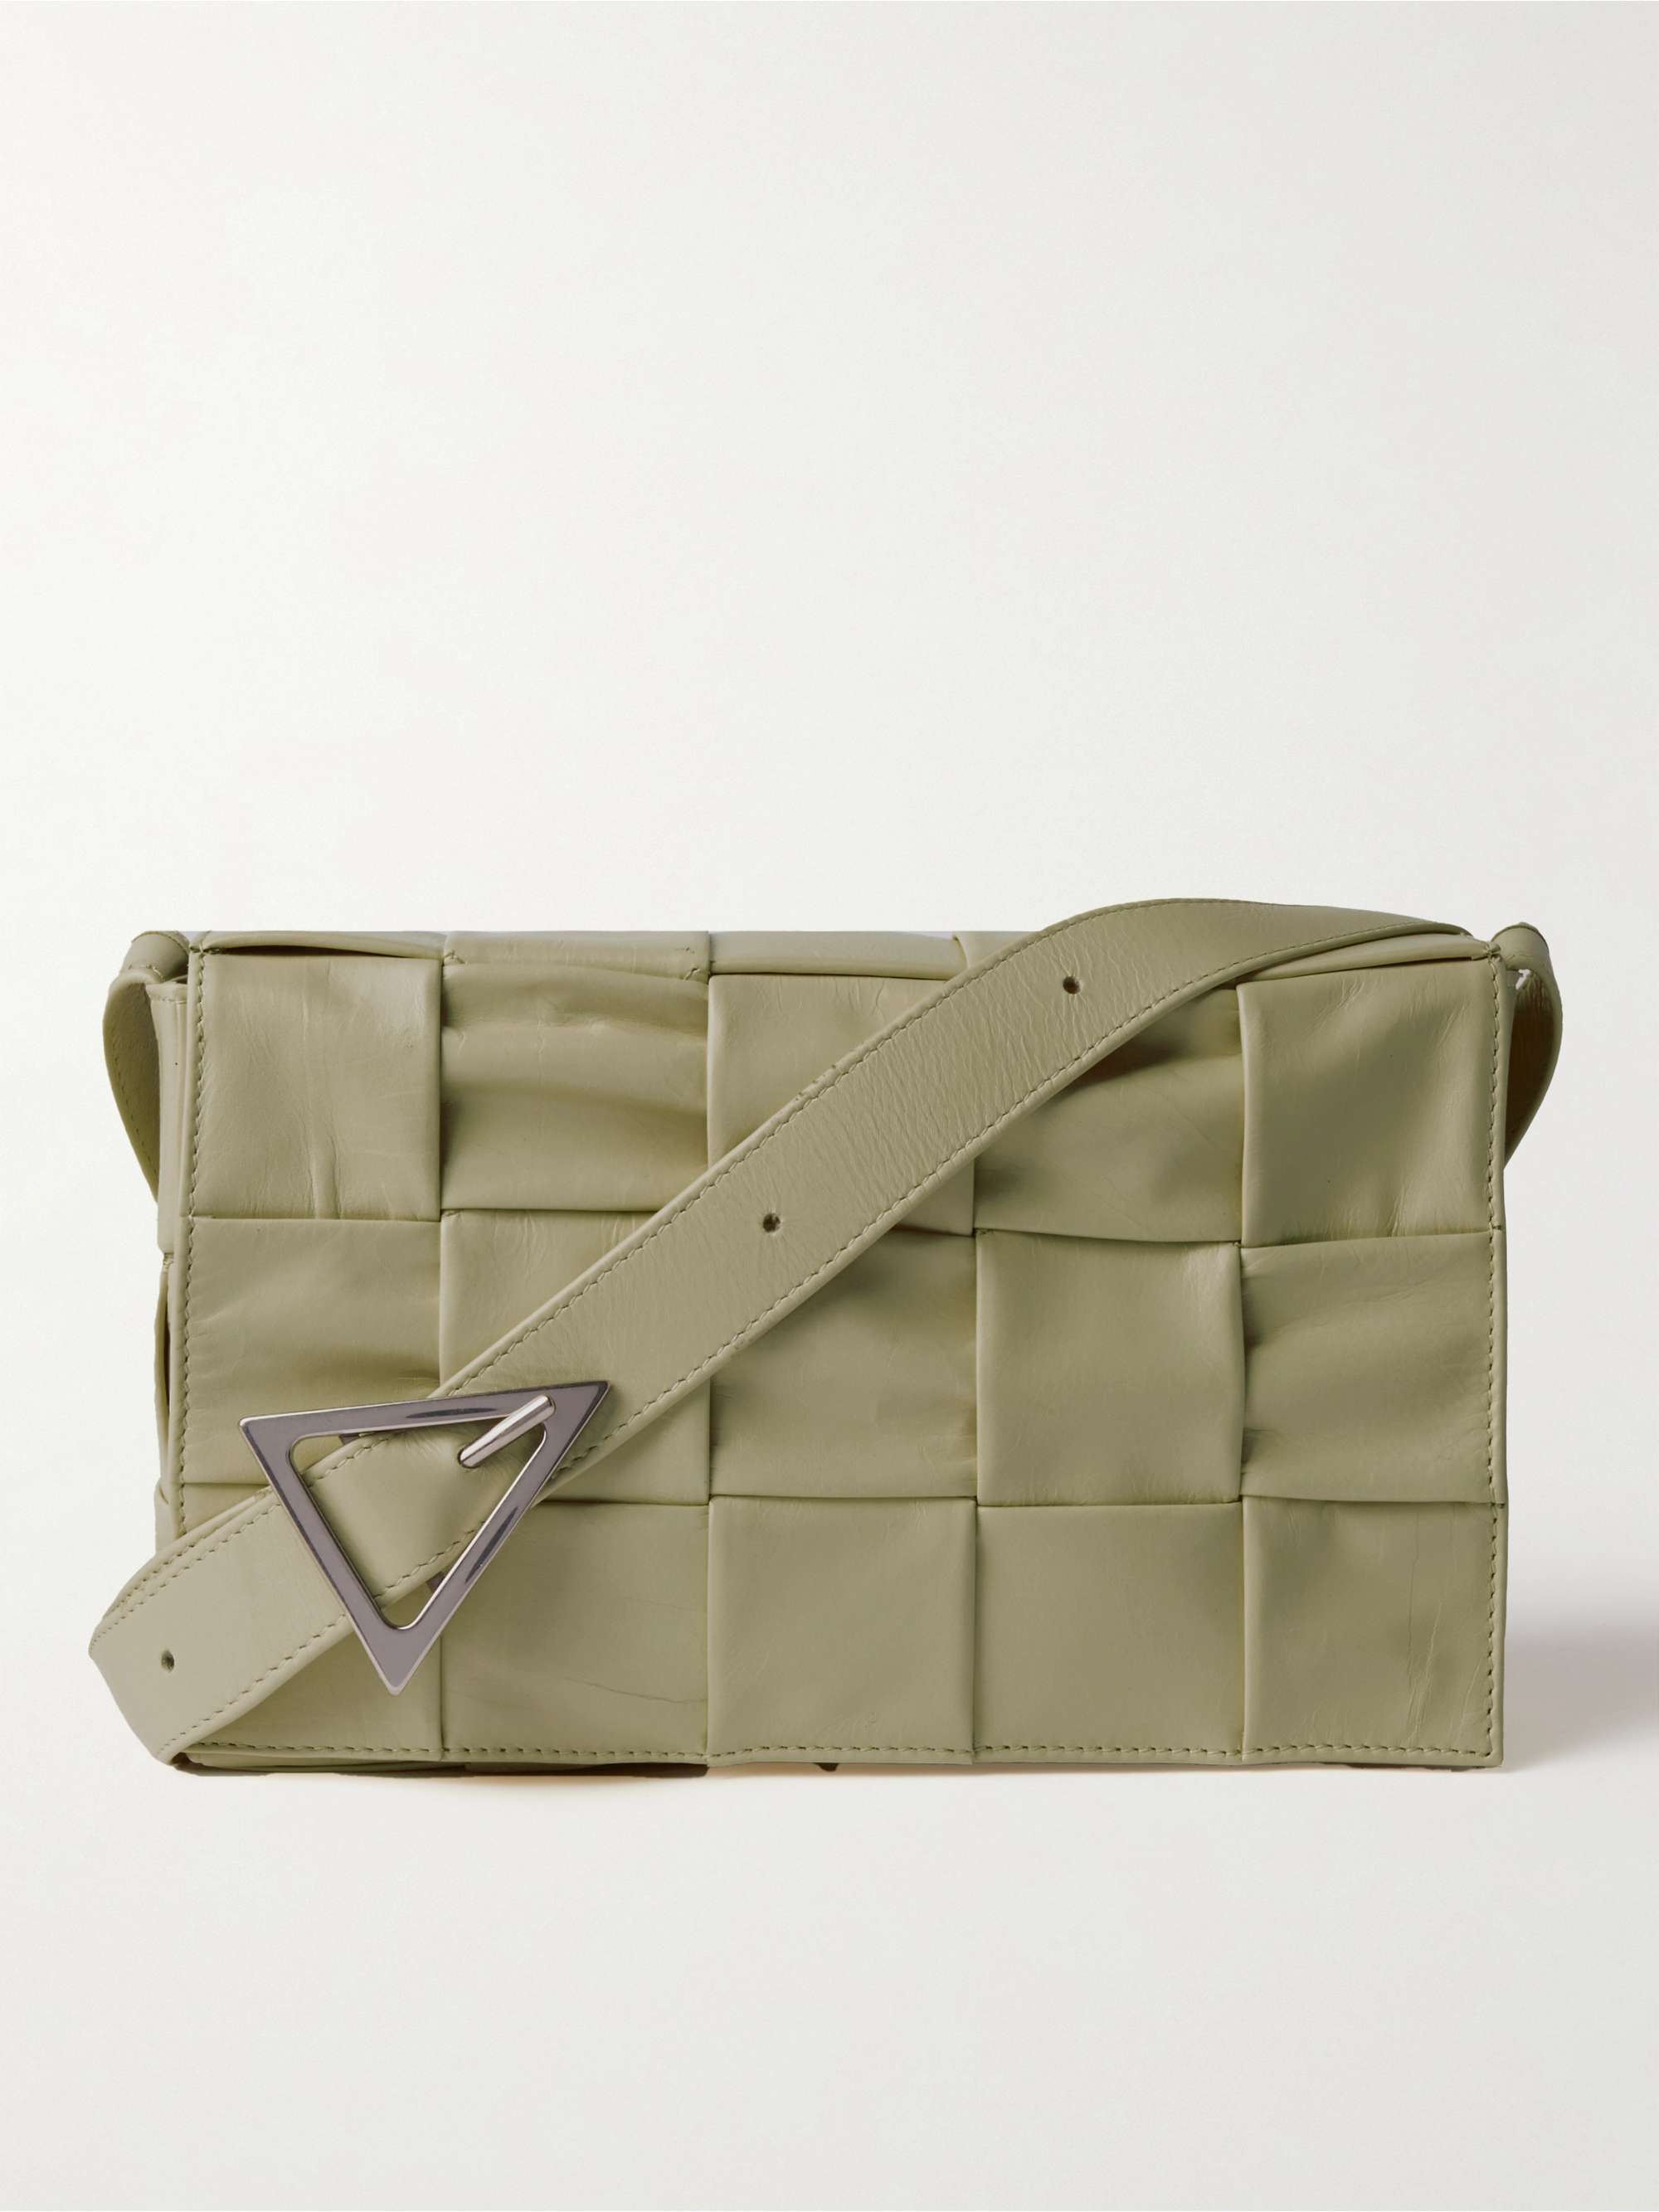 Bottega Veneta - Loop Mini Intrecciato Leather Shoulder Bag - Green - One Size - Net A Porter